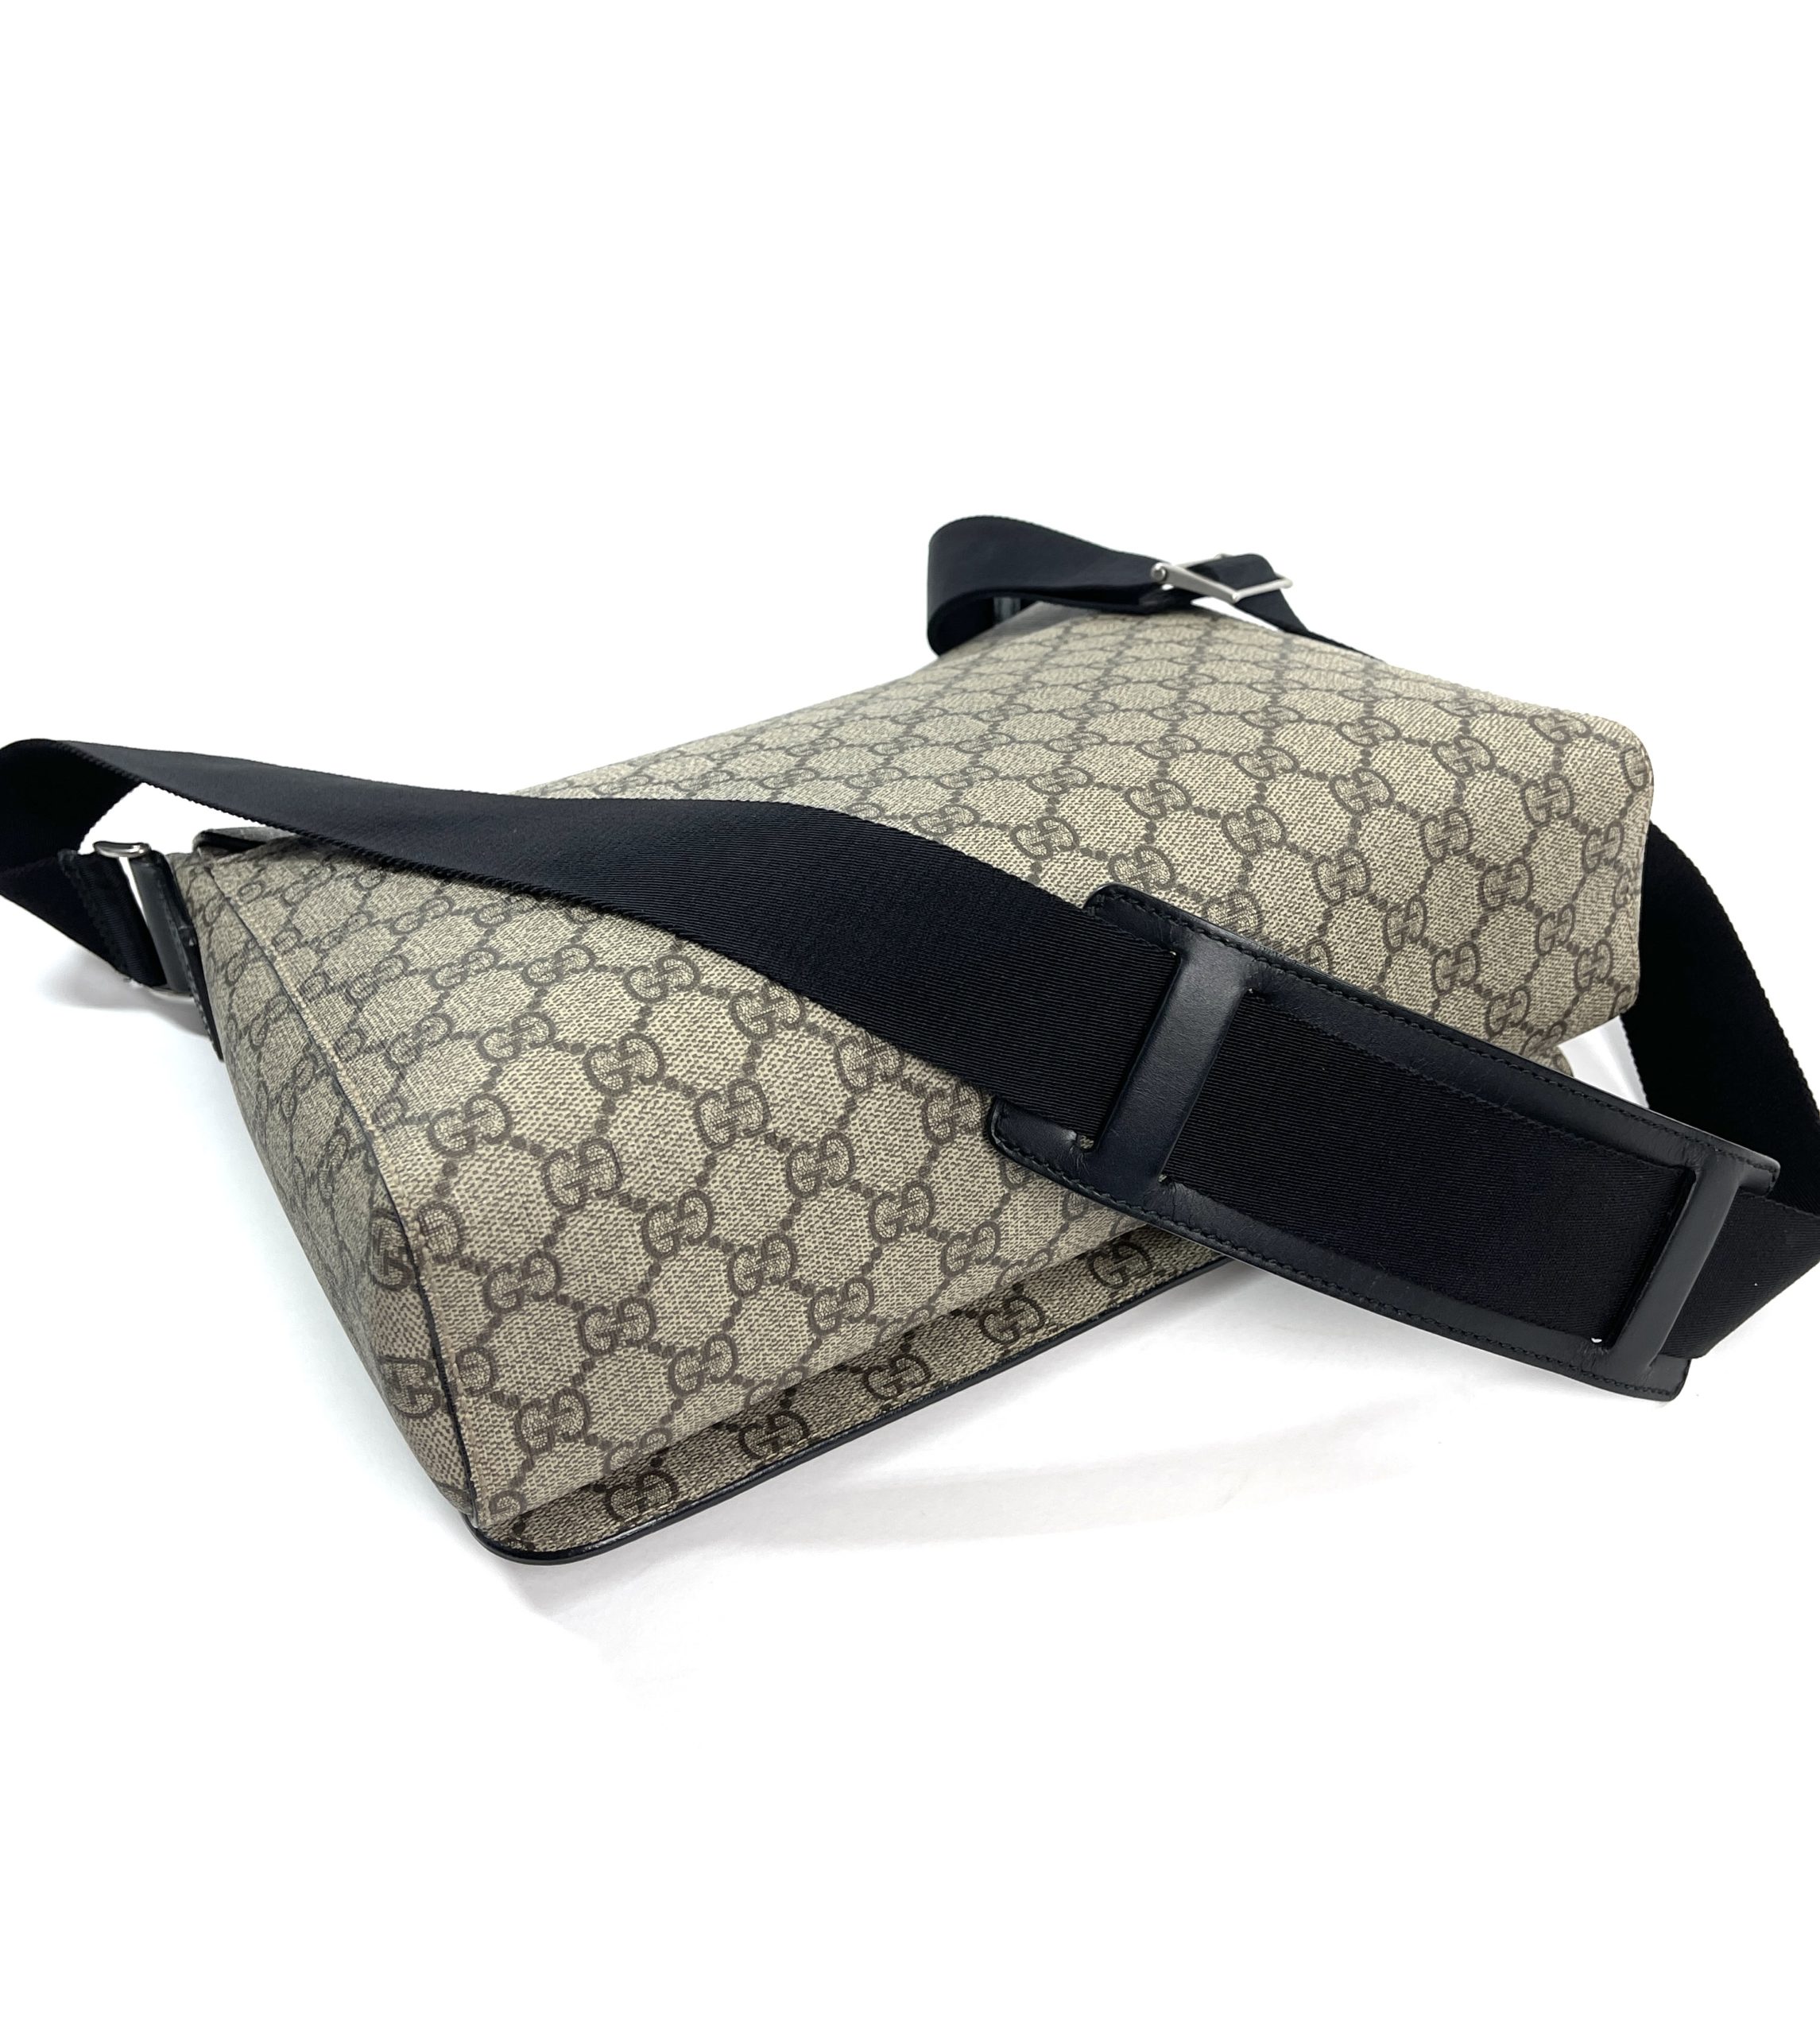 Gucci GG Supreme Monogram Web Flap Messenger Bag Black 